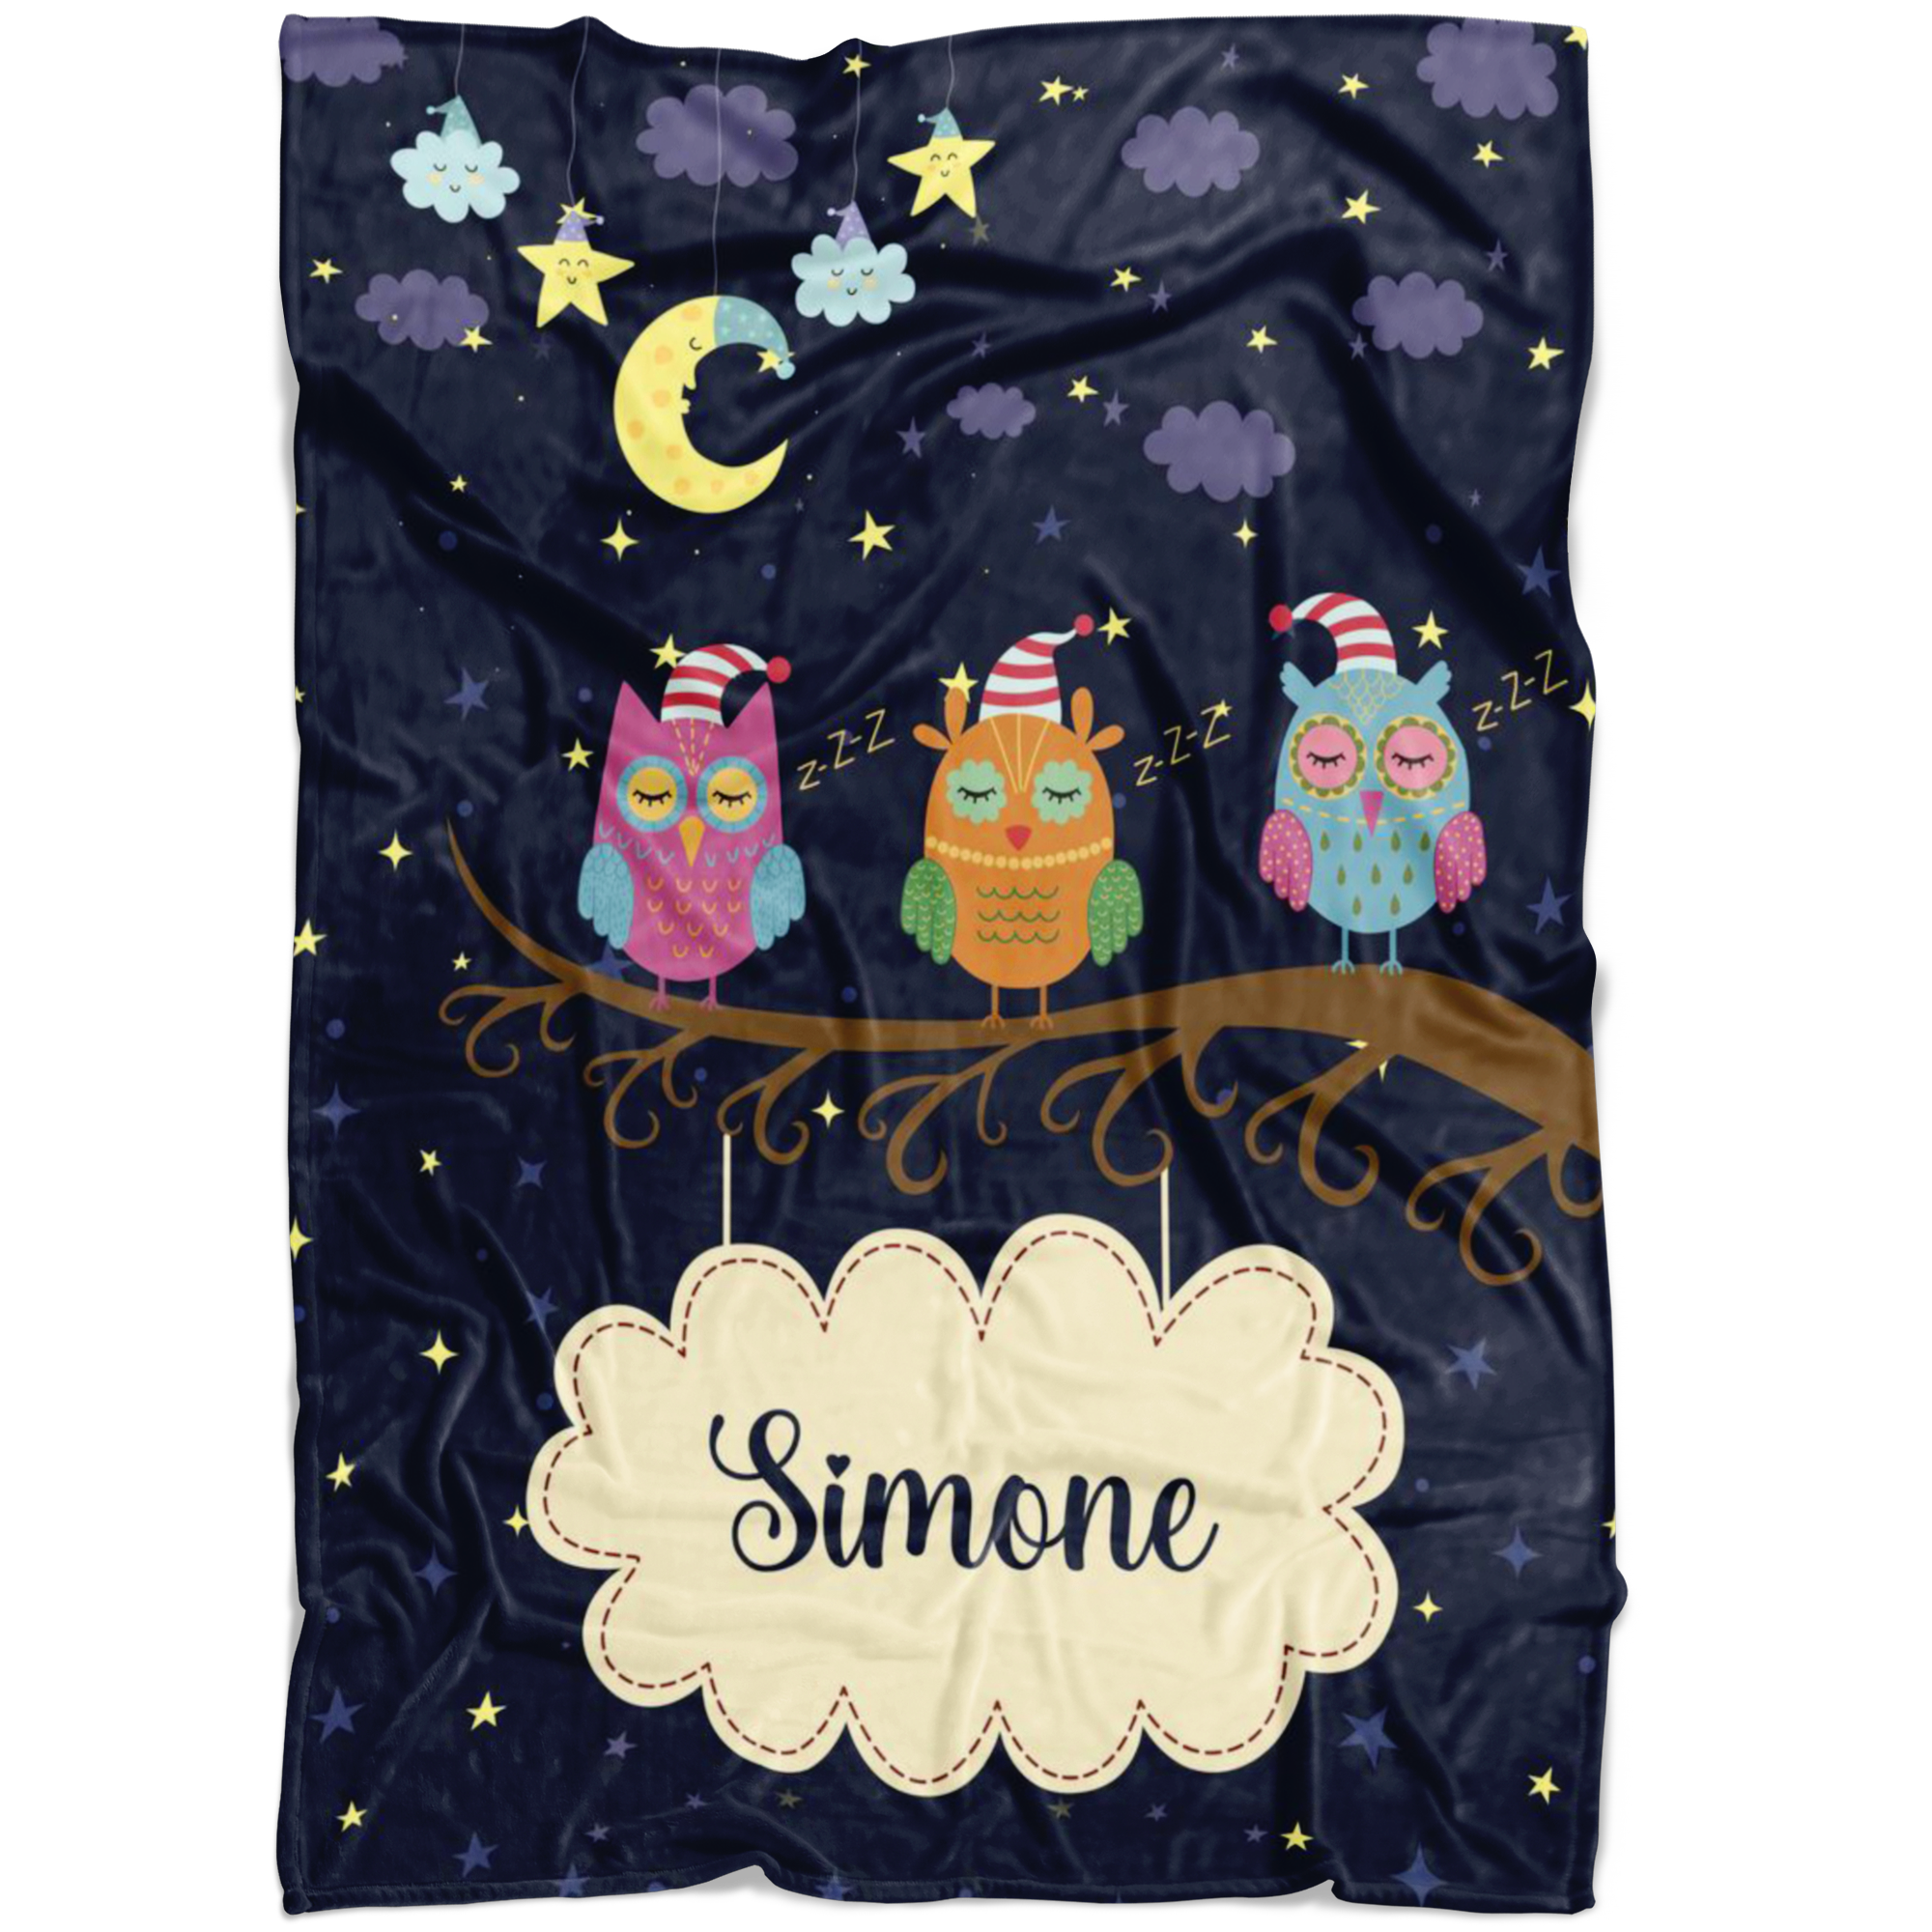 Personalized Name Sleepy Owls Blanket for Kids - Simone